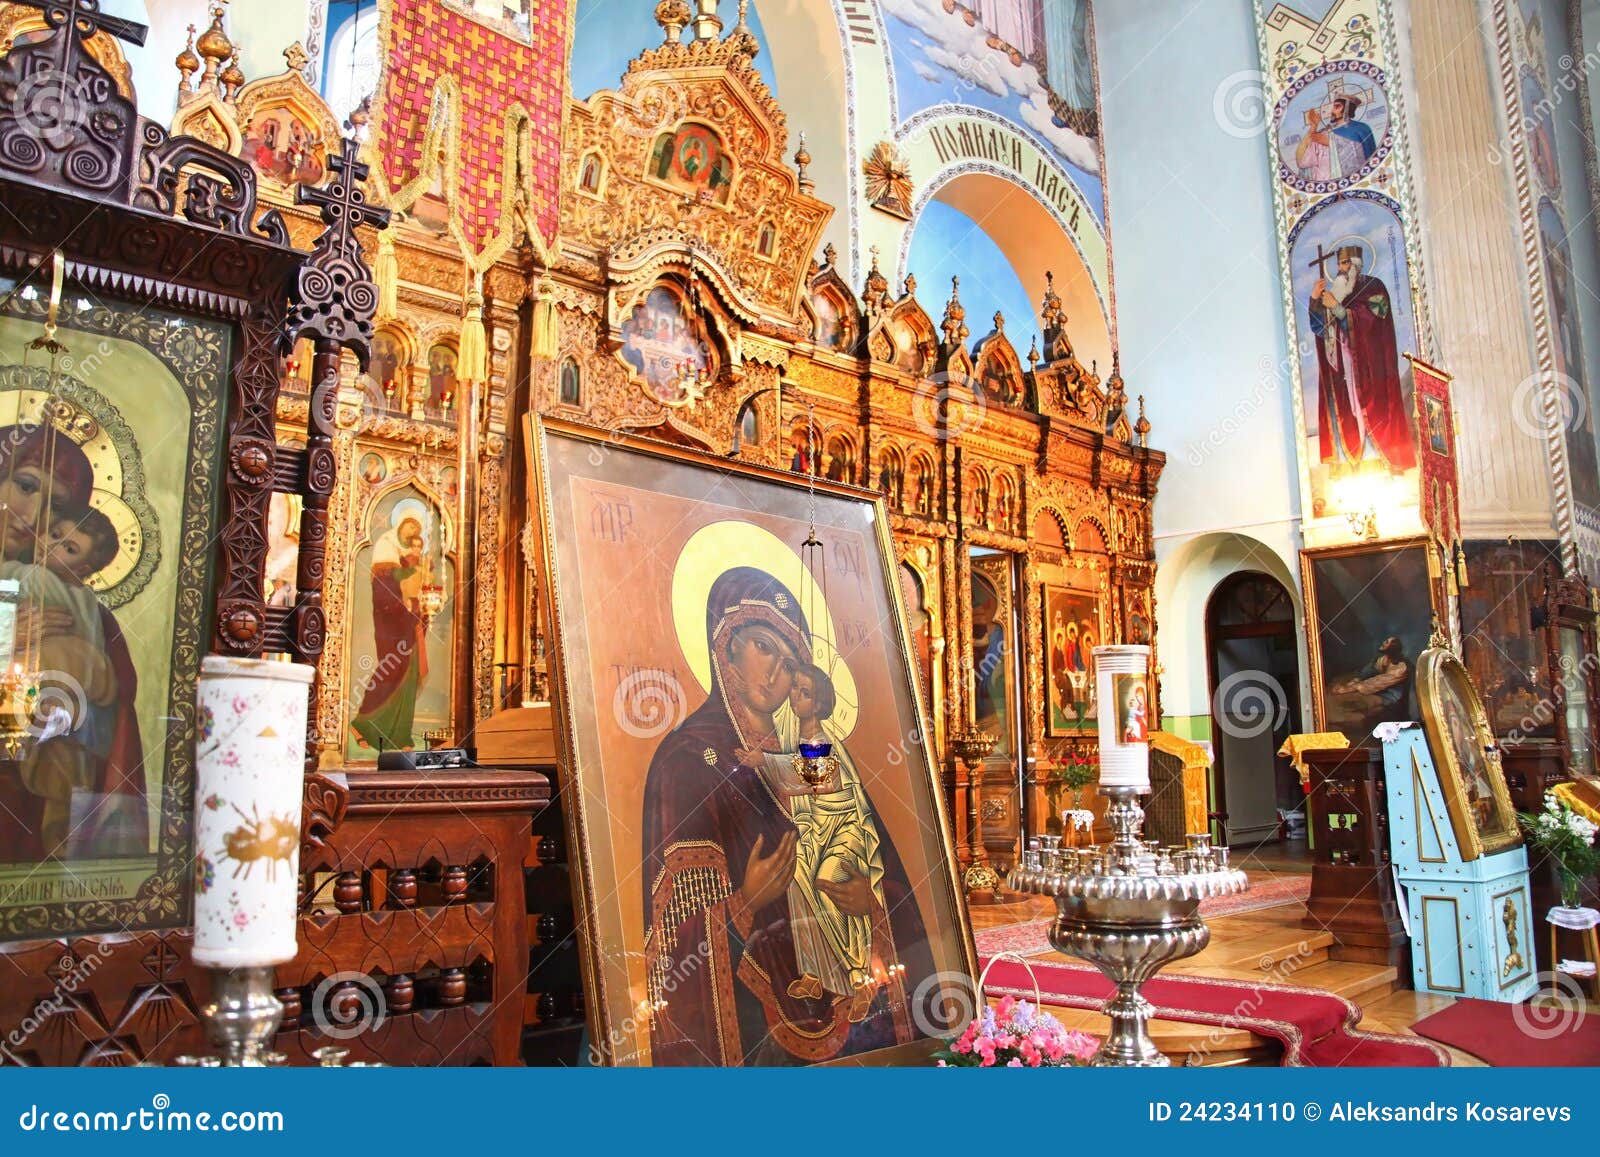 saint trinity orthodox convent interior